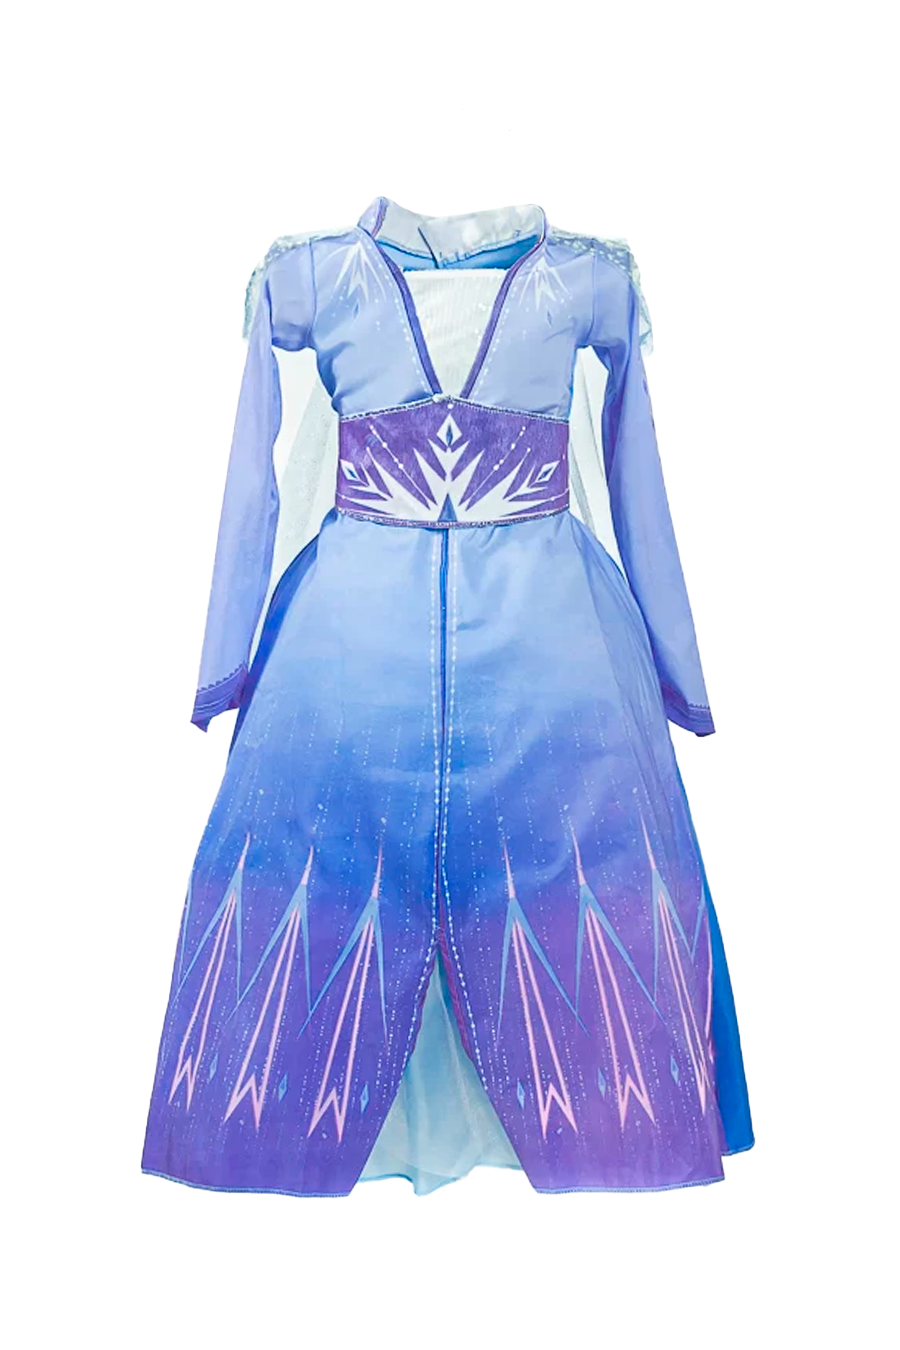 Vestido Fantasia Infantil Elsa Frozen 2 Emfantasy 9135